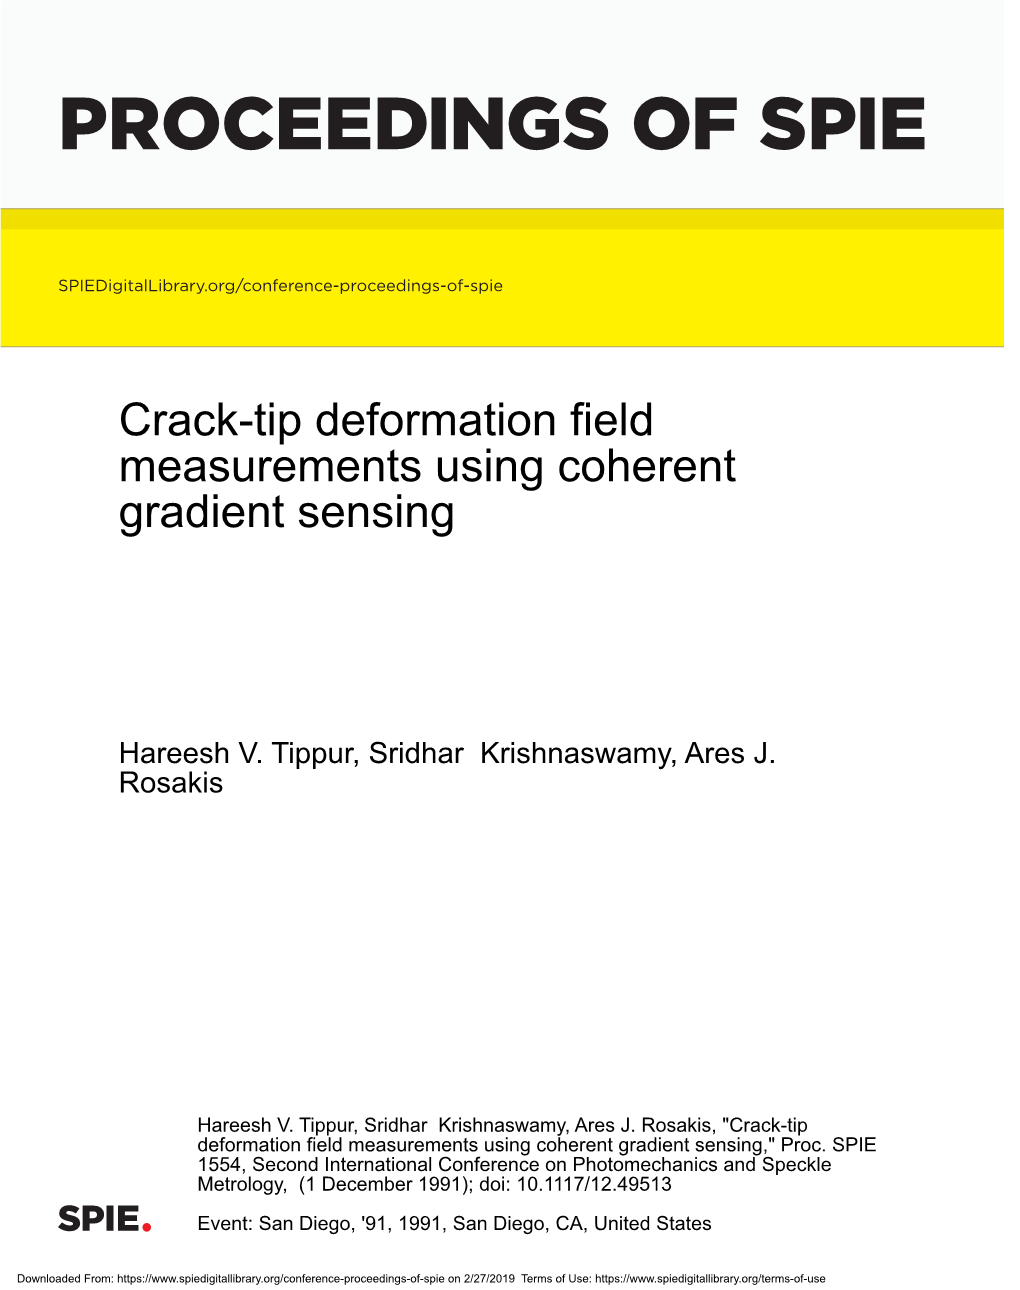 Crack-Tip Deformation Field Measurements Using Coherent Gradient Sensing